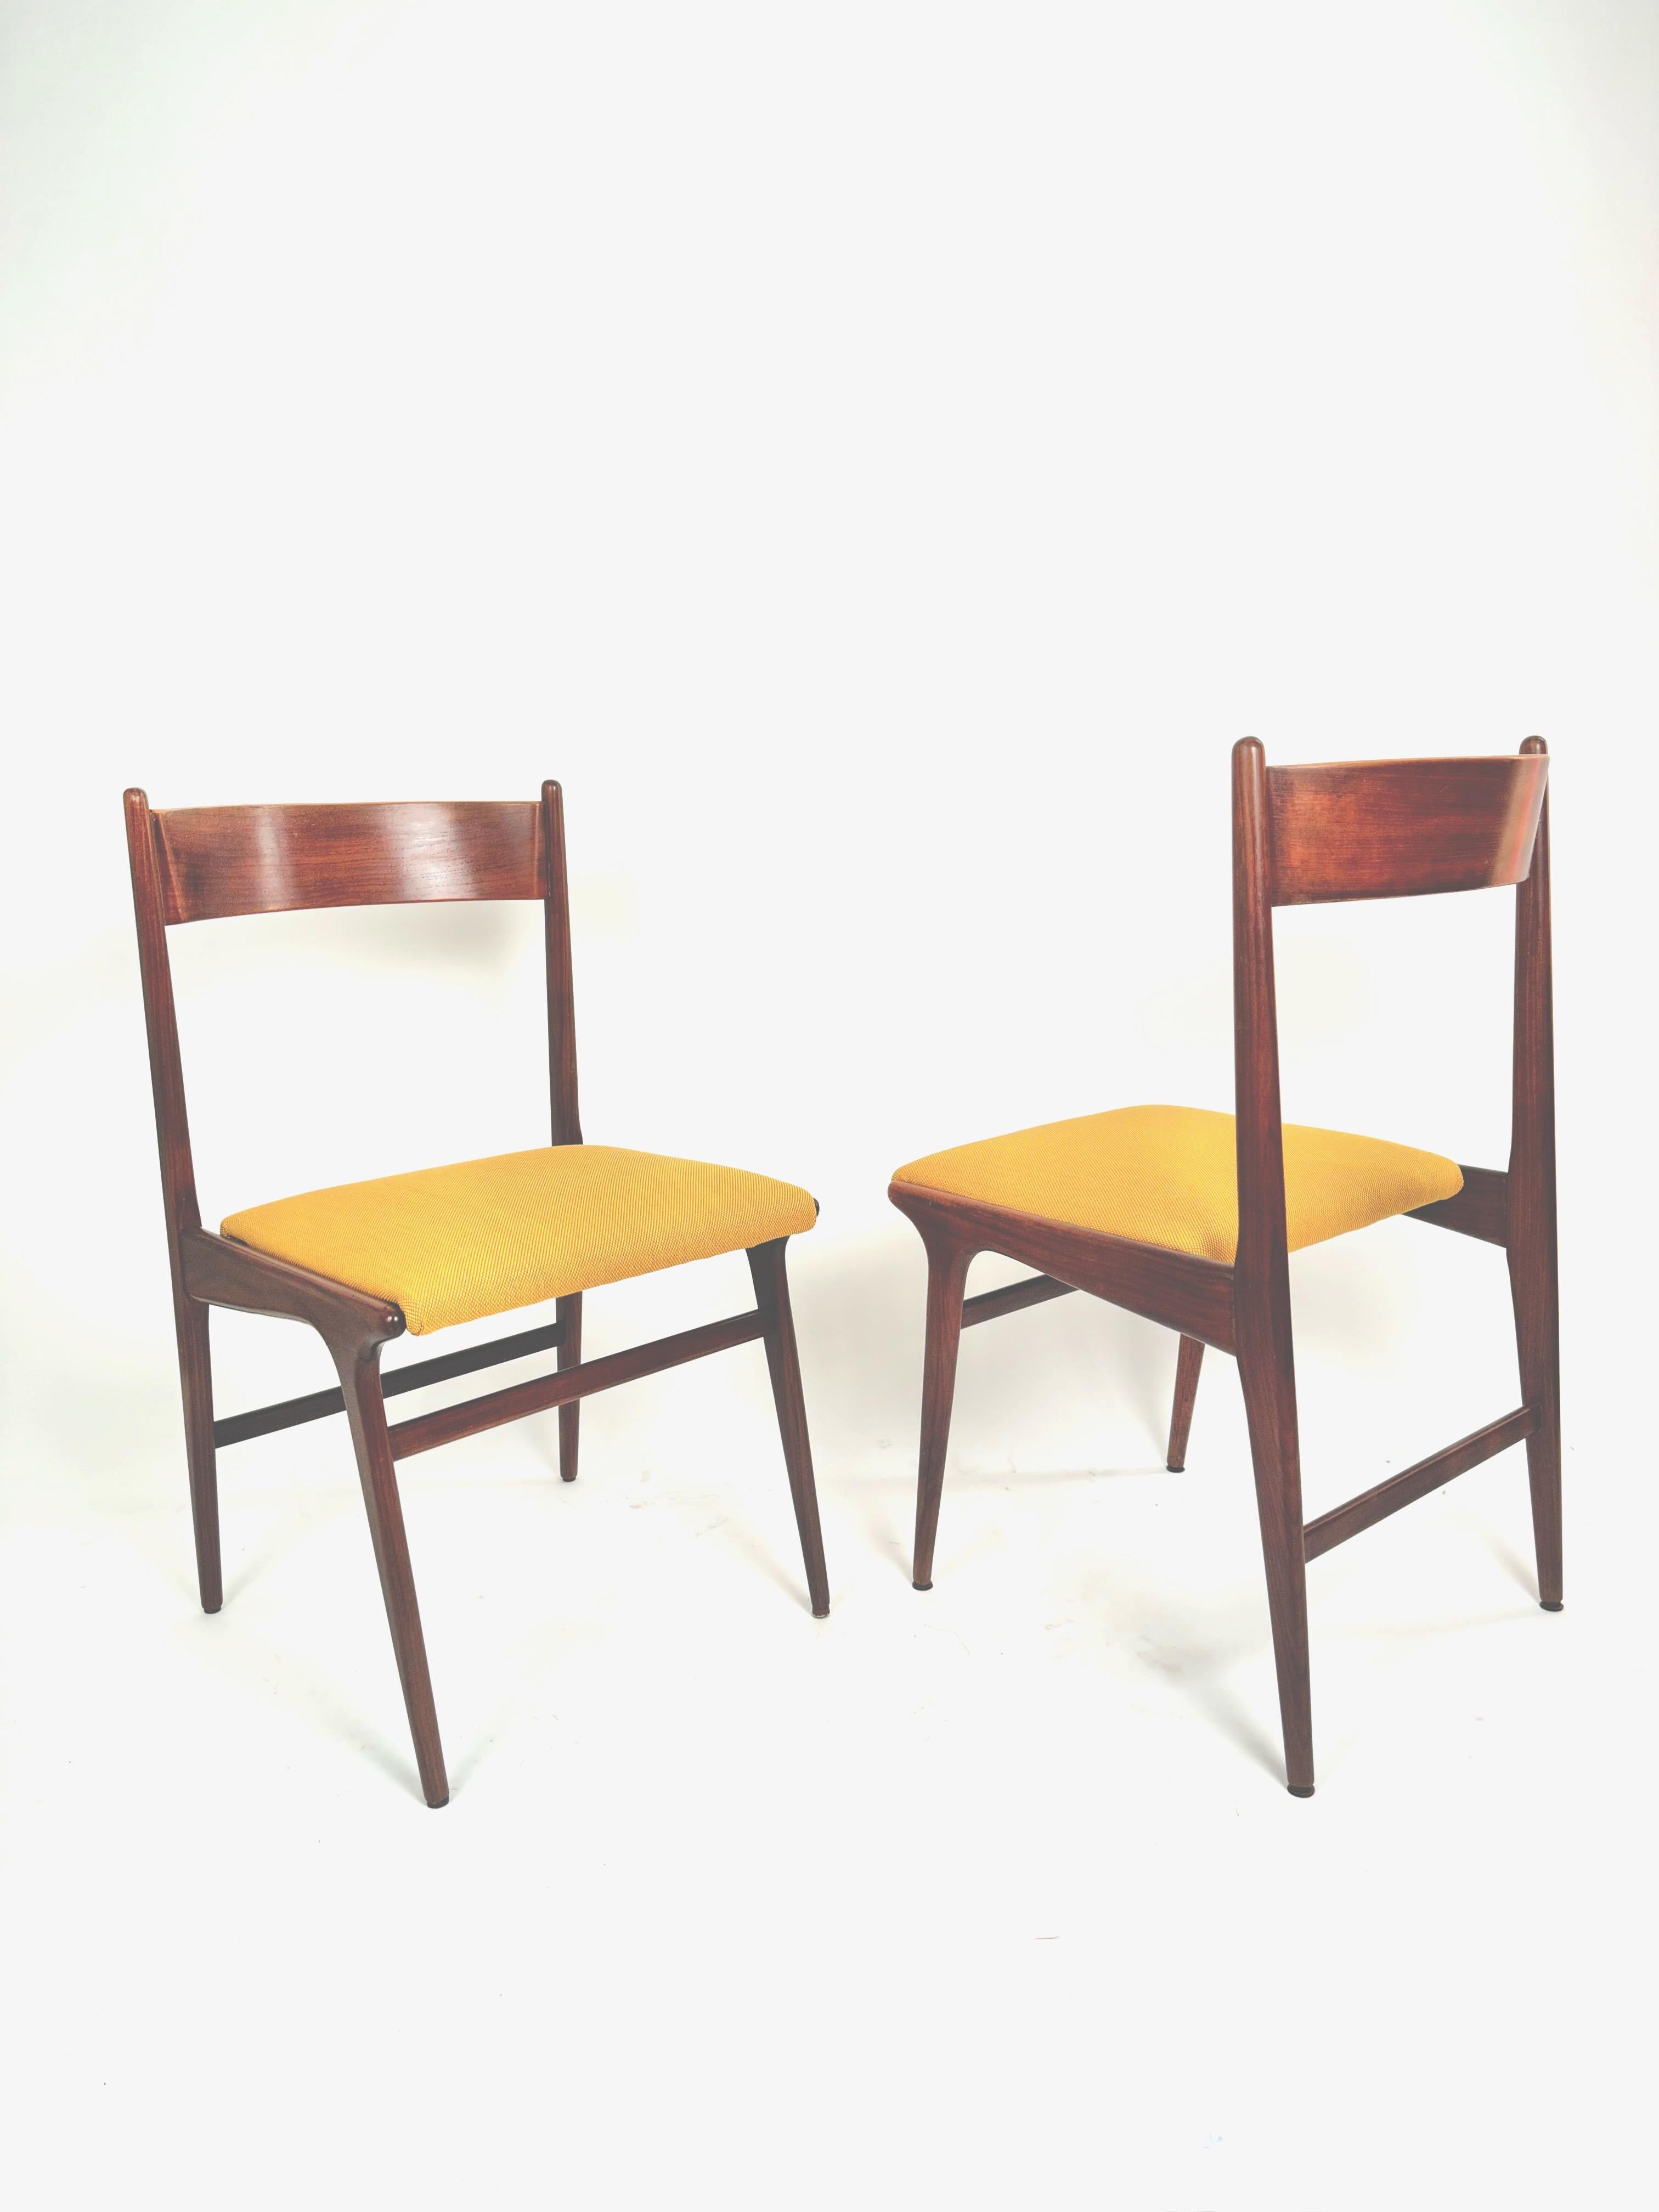 Carlo de Carli MidSet of Four Teak Dining Chairs in Kvadrat Yello Fabric, 1960s For Sale 7